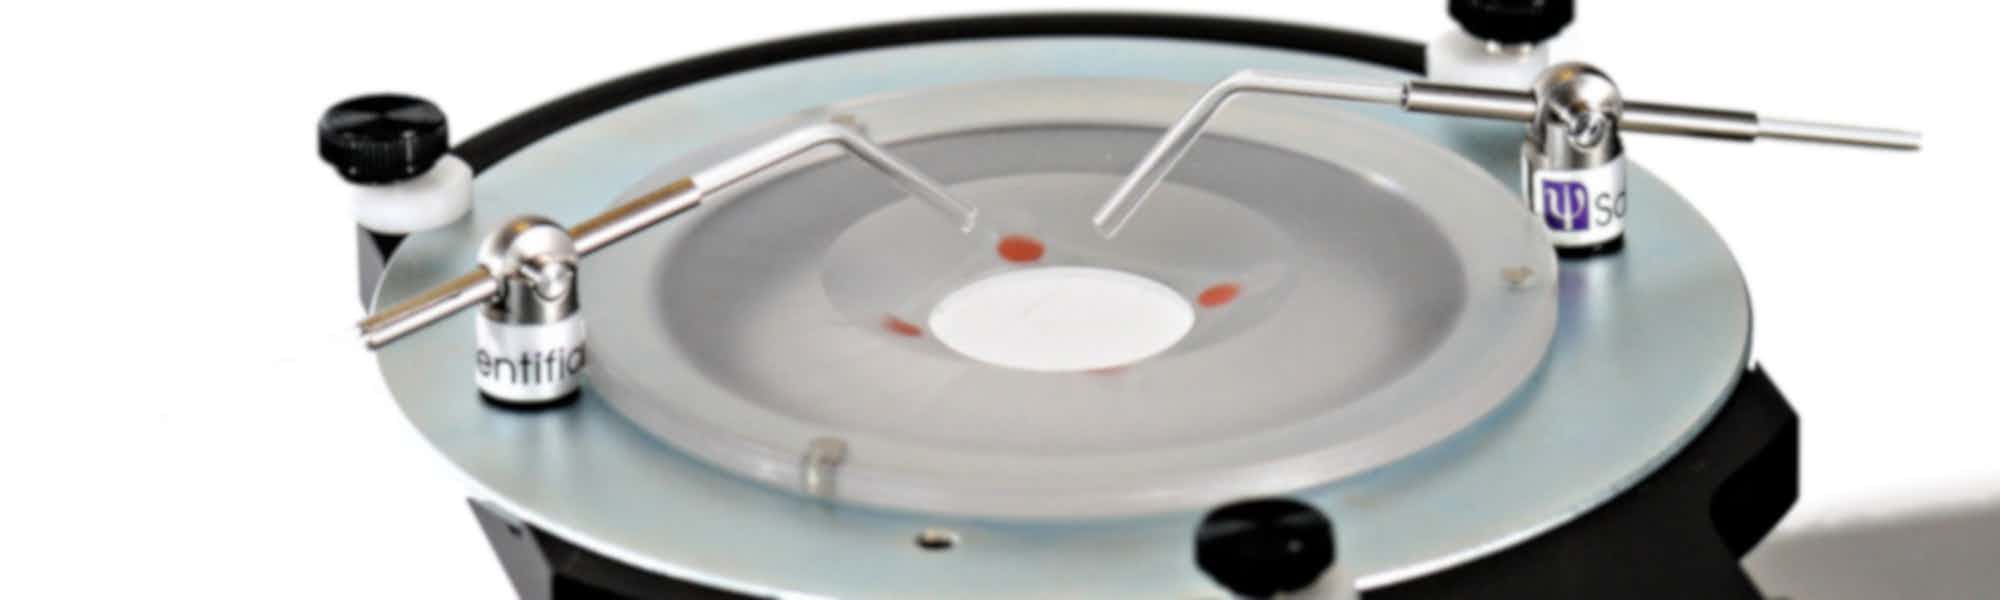 Scientifica Bath Perfusion Tool